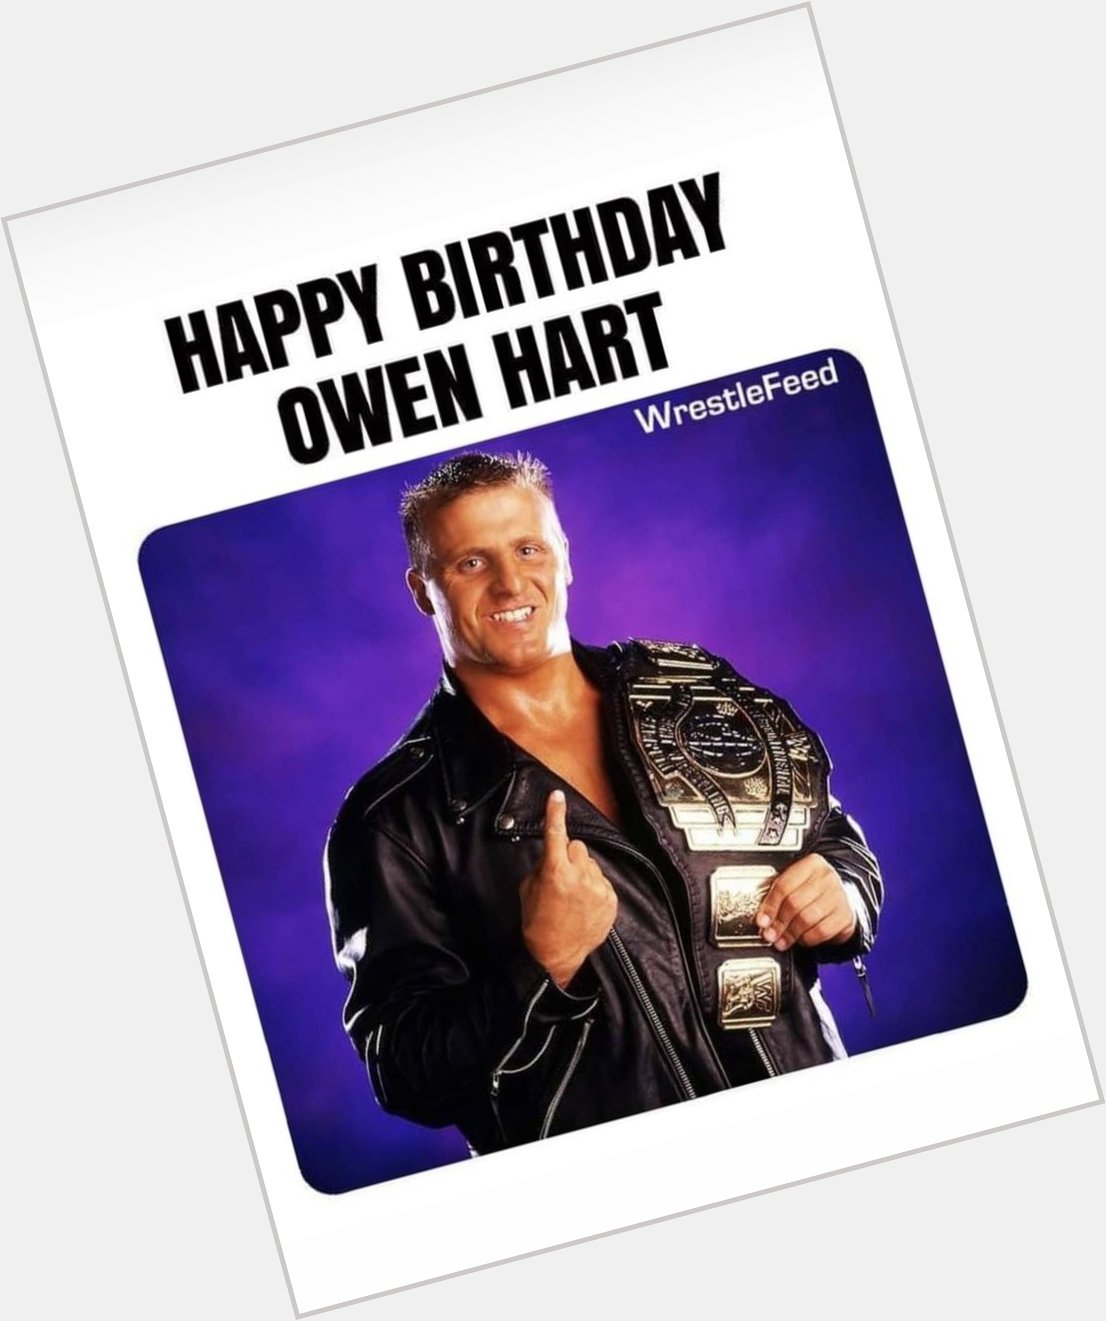 Happy birthday Owen Hart! RIP  